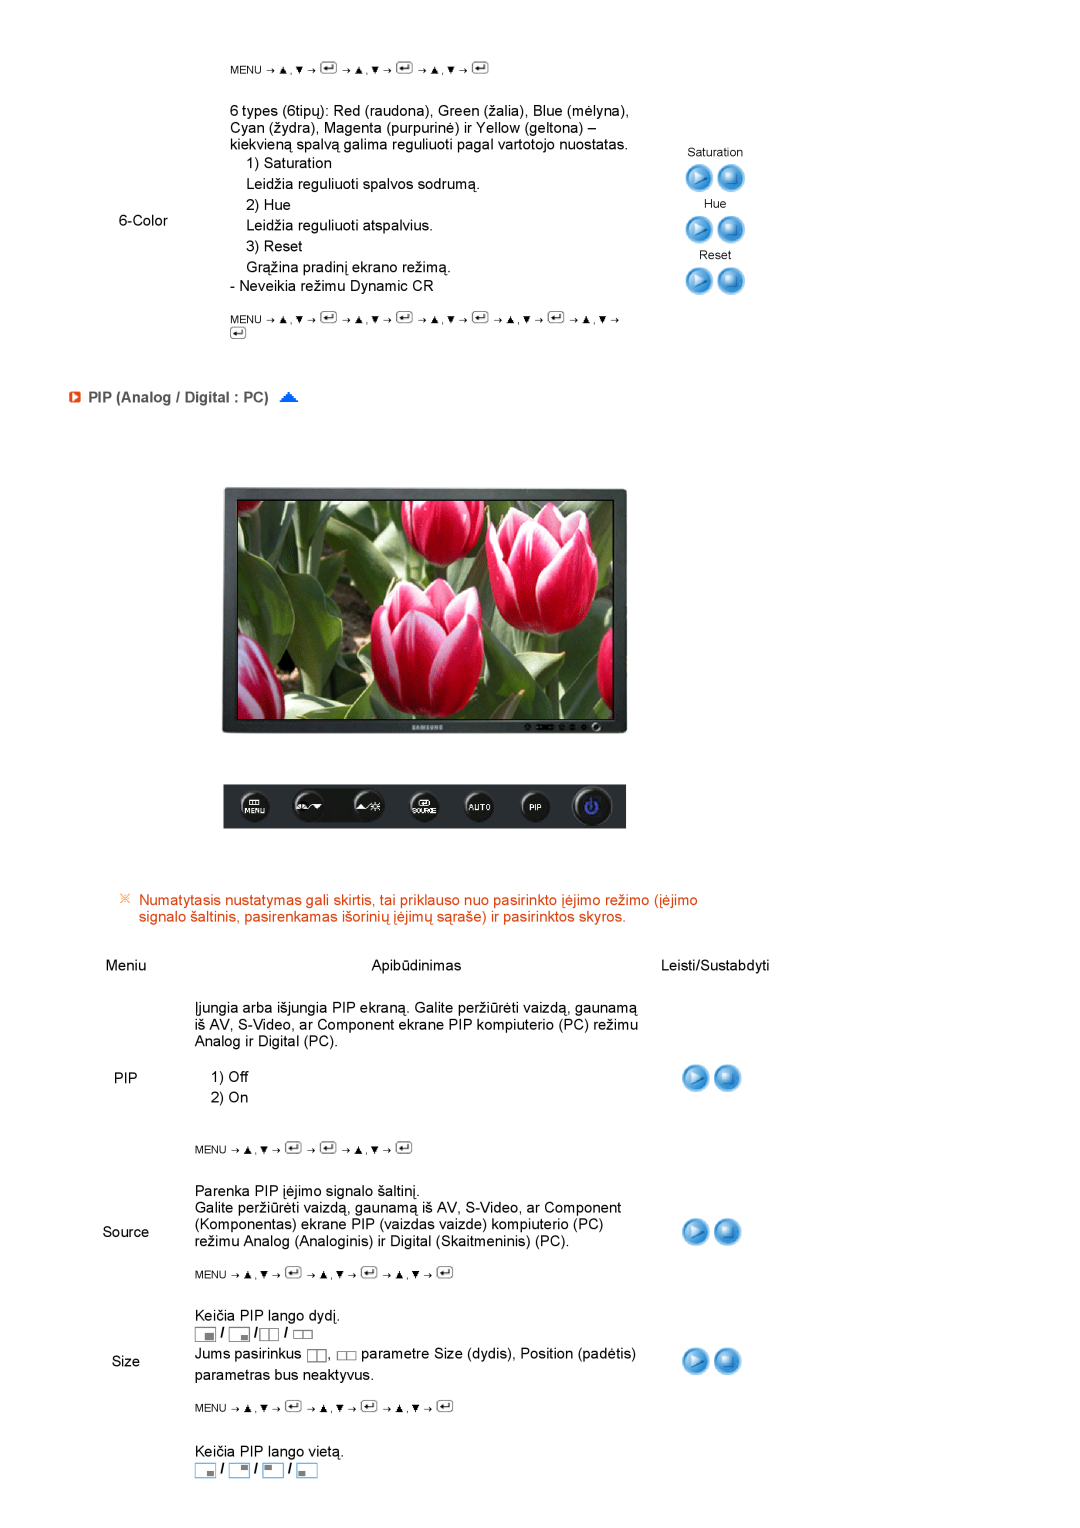 Samsung LS27HUBCB/EDC manual PIP Analog / Digital PC, Saturation Hue Reset 